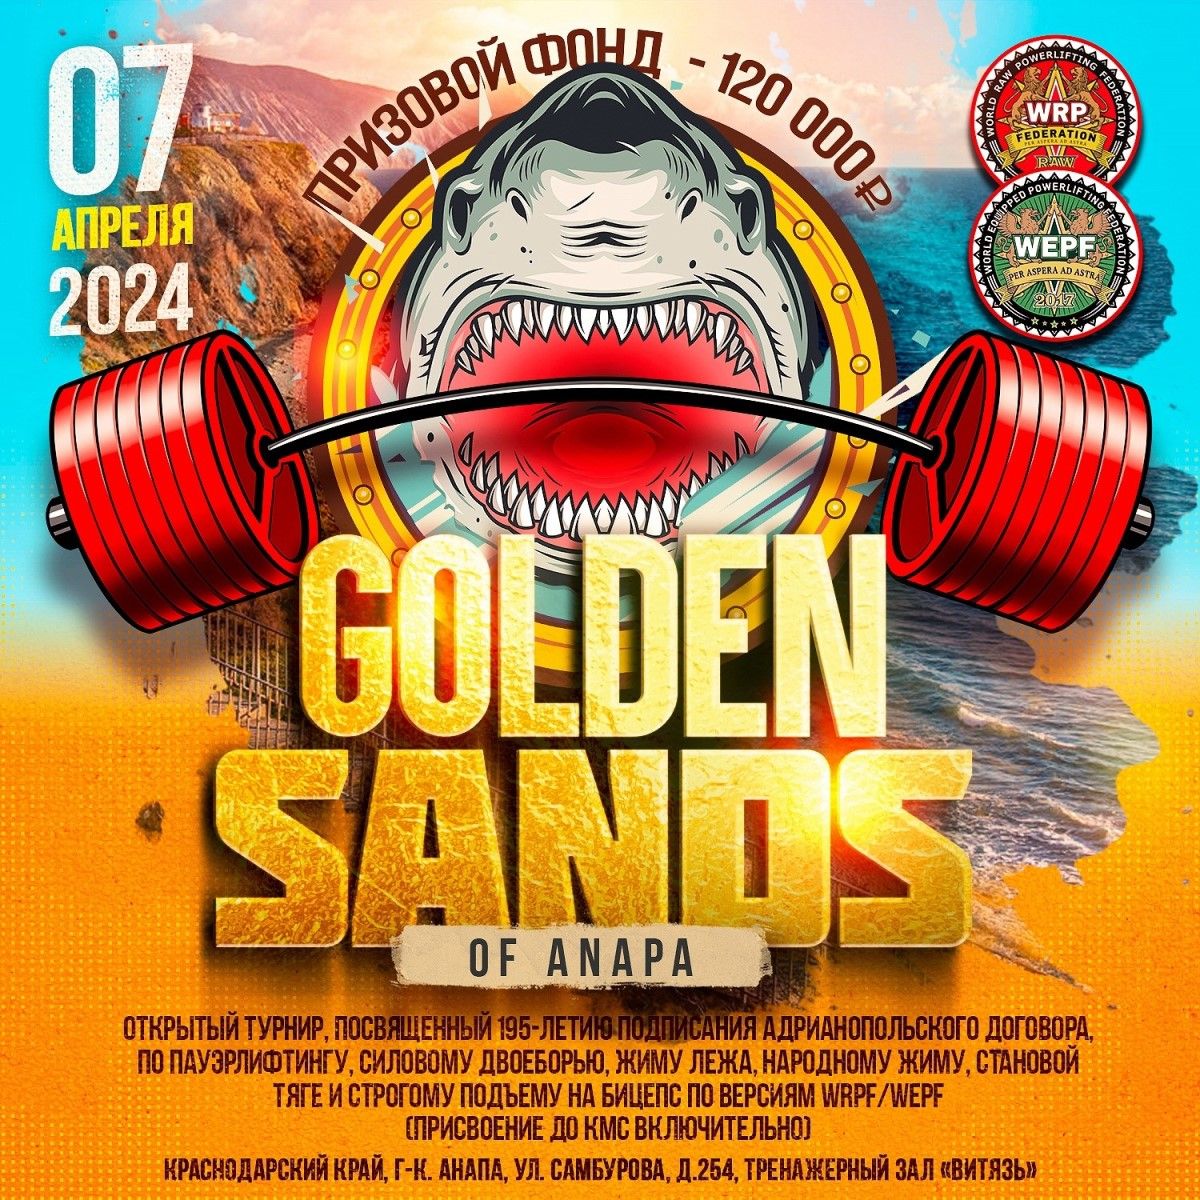 Турнир «Golden sands of Anapa» по пауэрлифтингу, народному жиму и строгому подъему на бицепс WRPF/WEPF, Анапа, 07.04.2024 